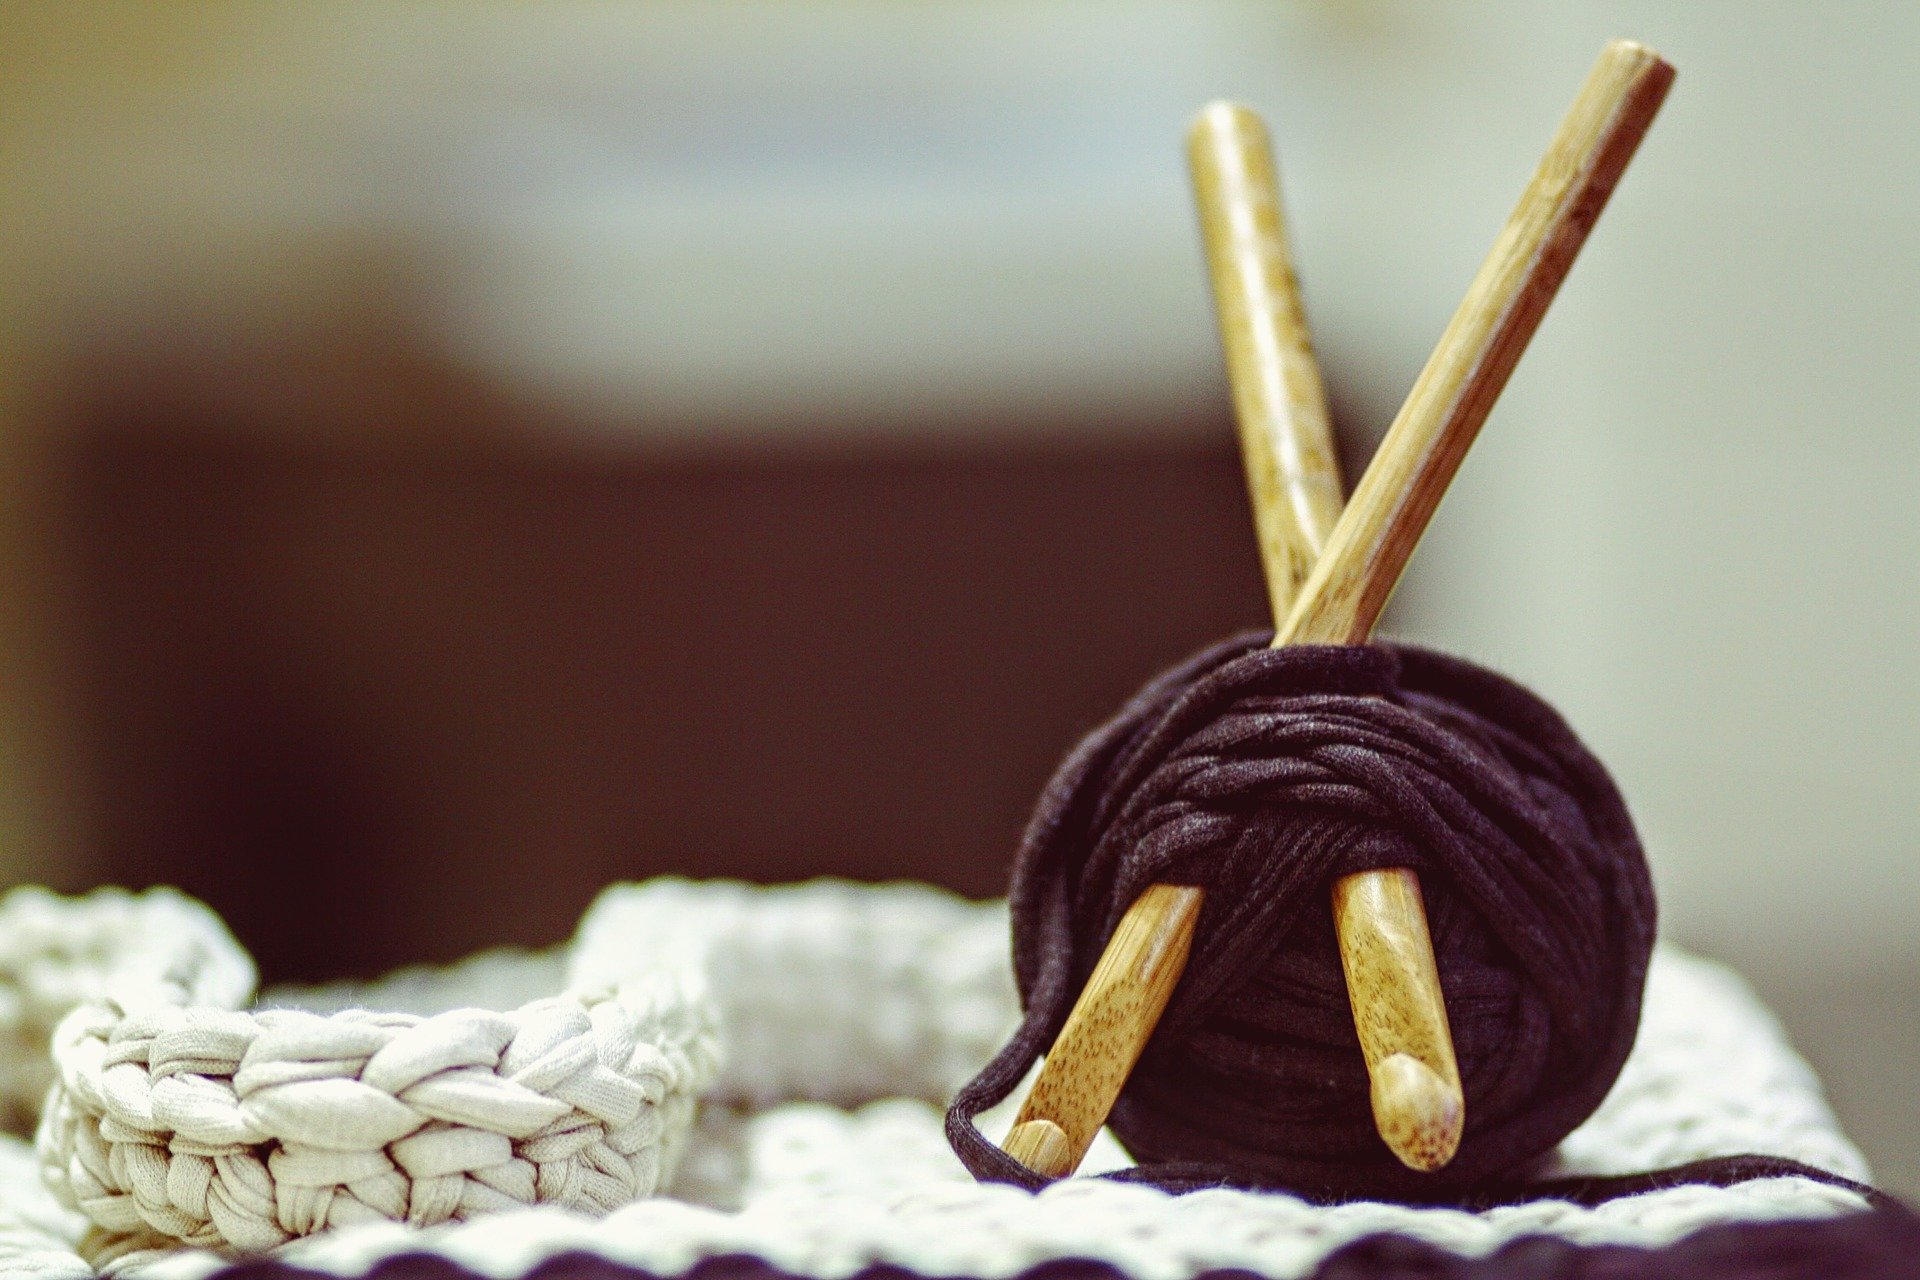 crochet history